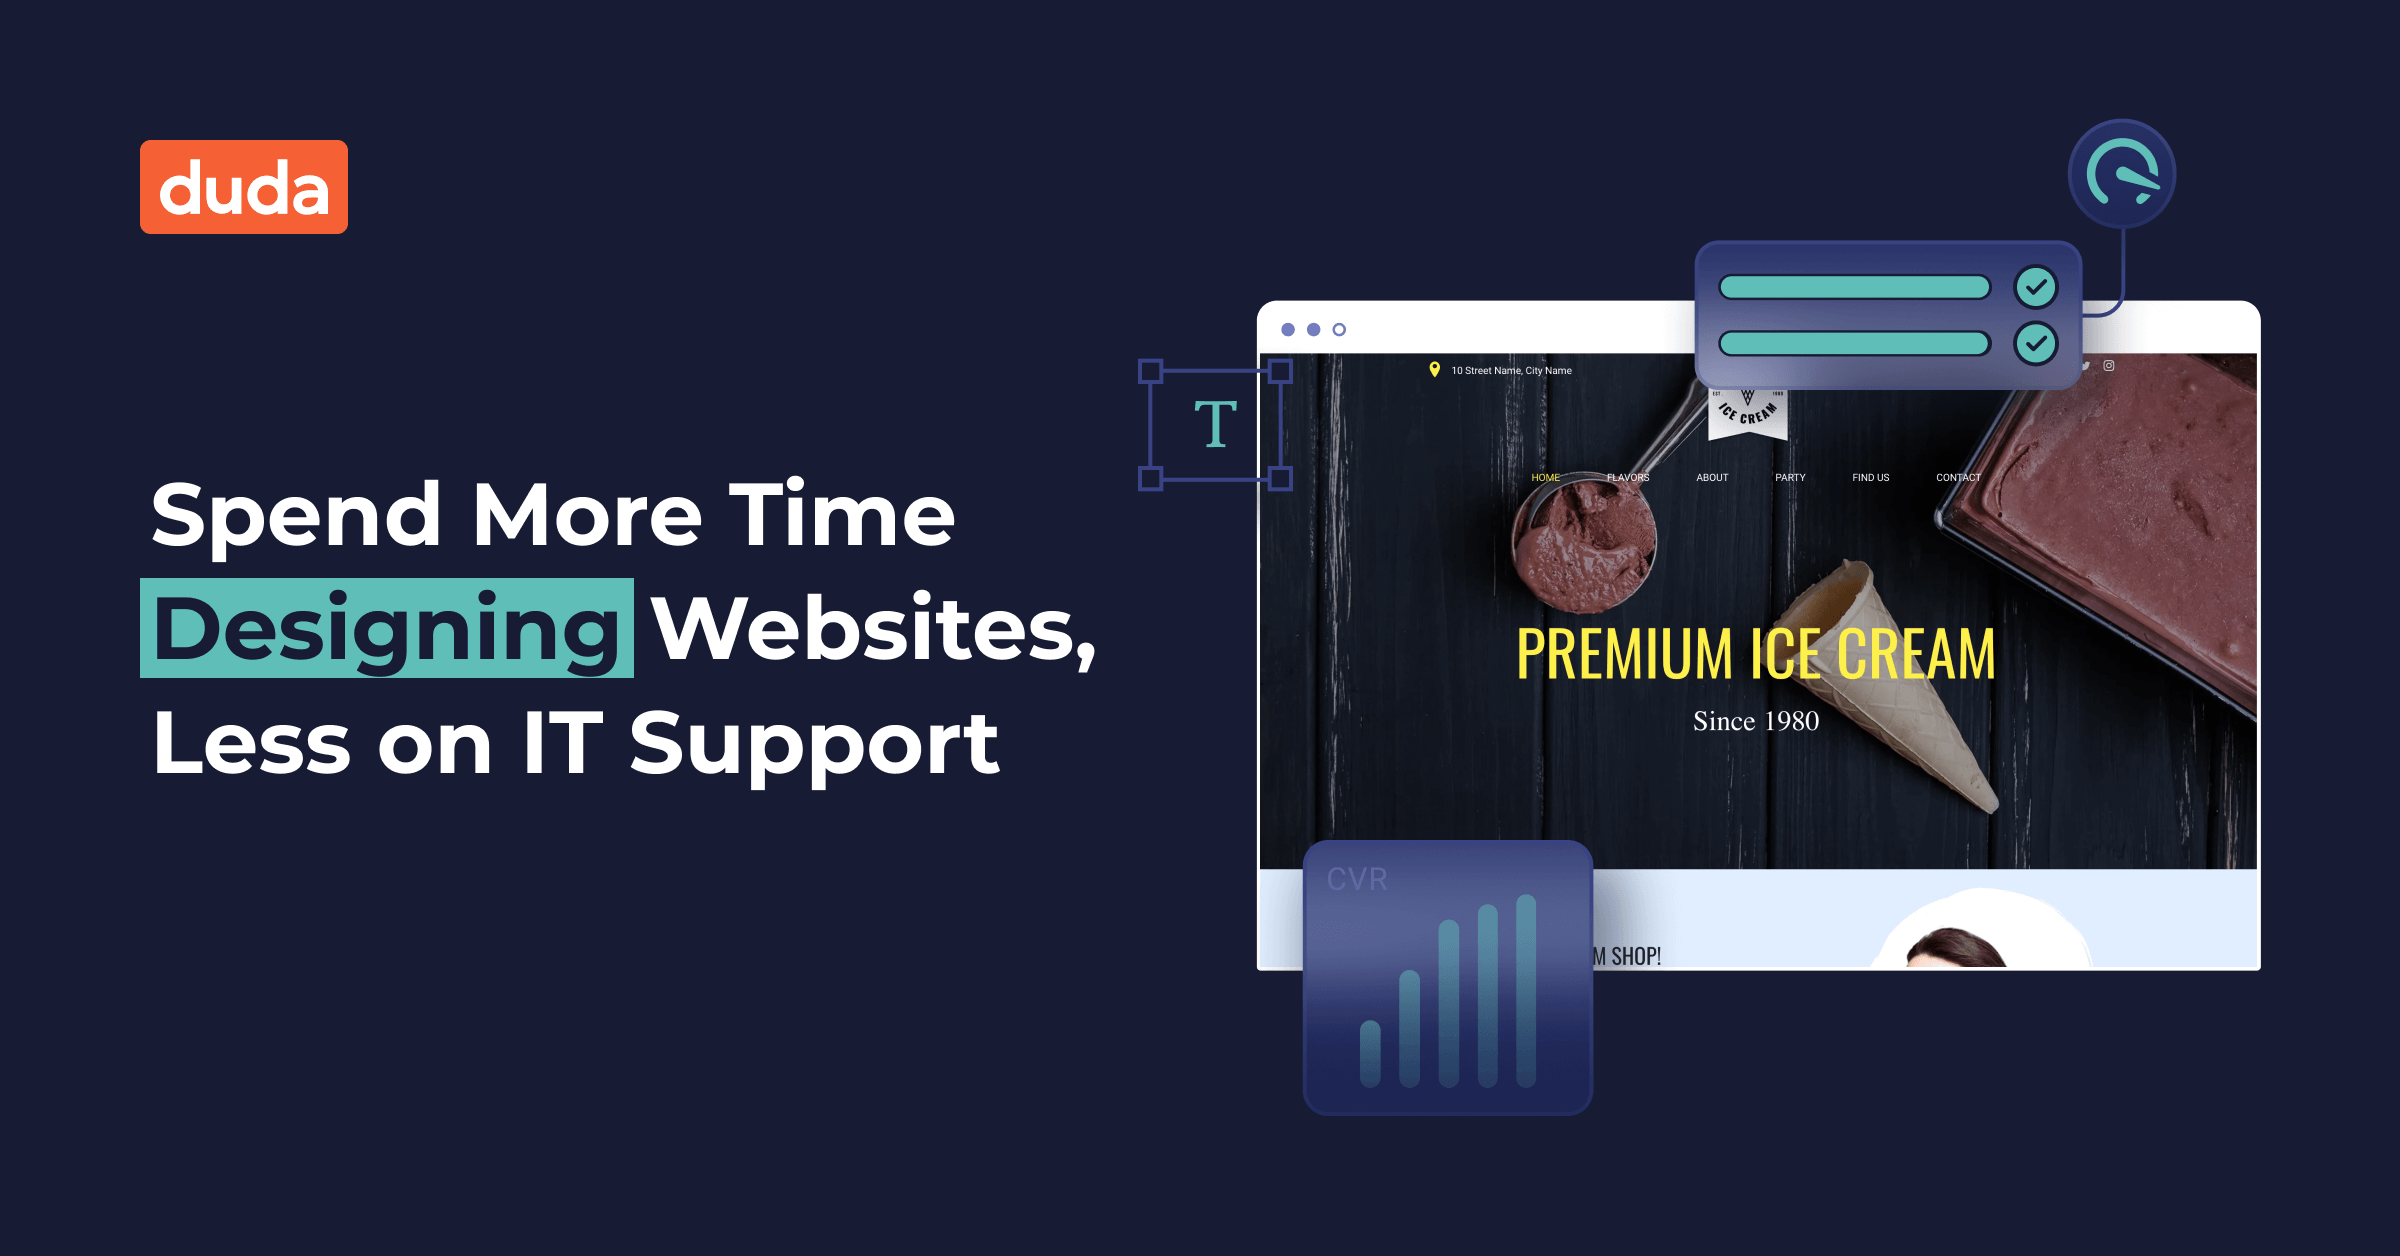 "Send more time designing websites, less on IT support" Duda